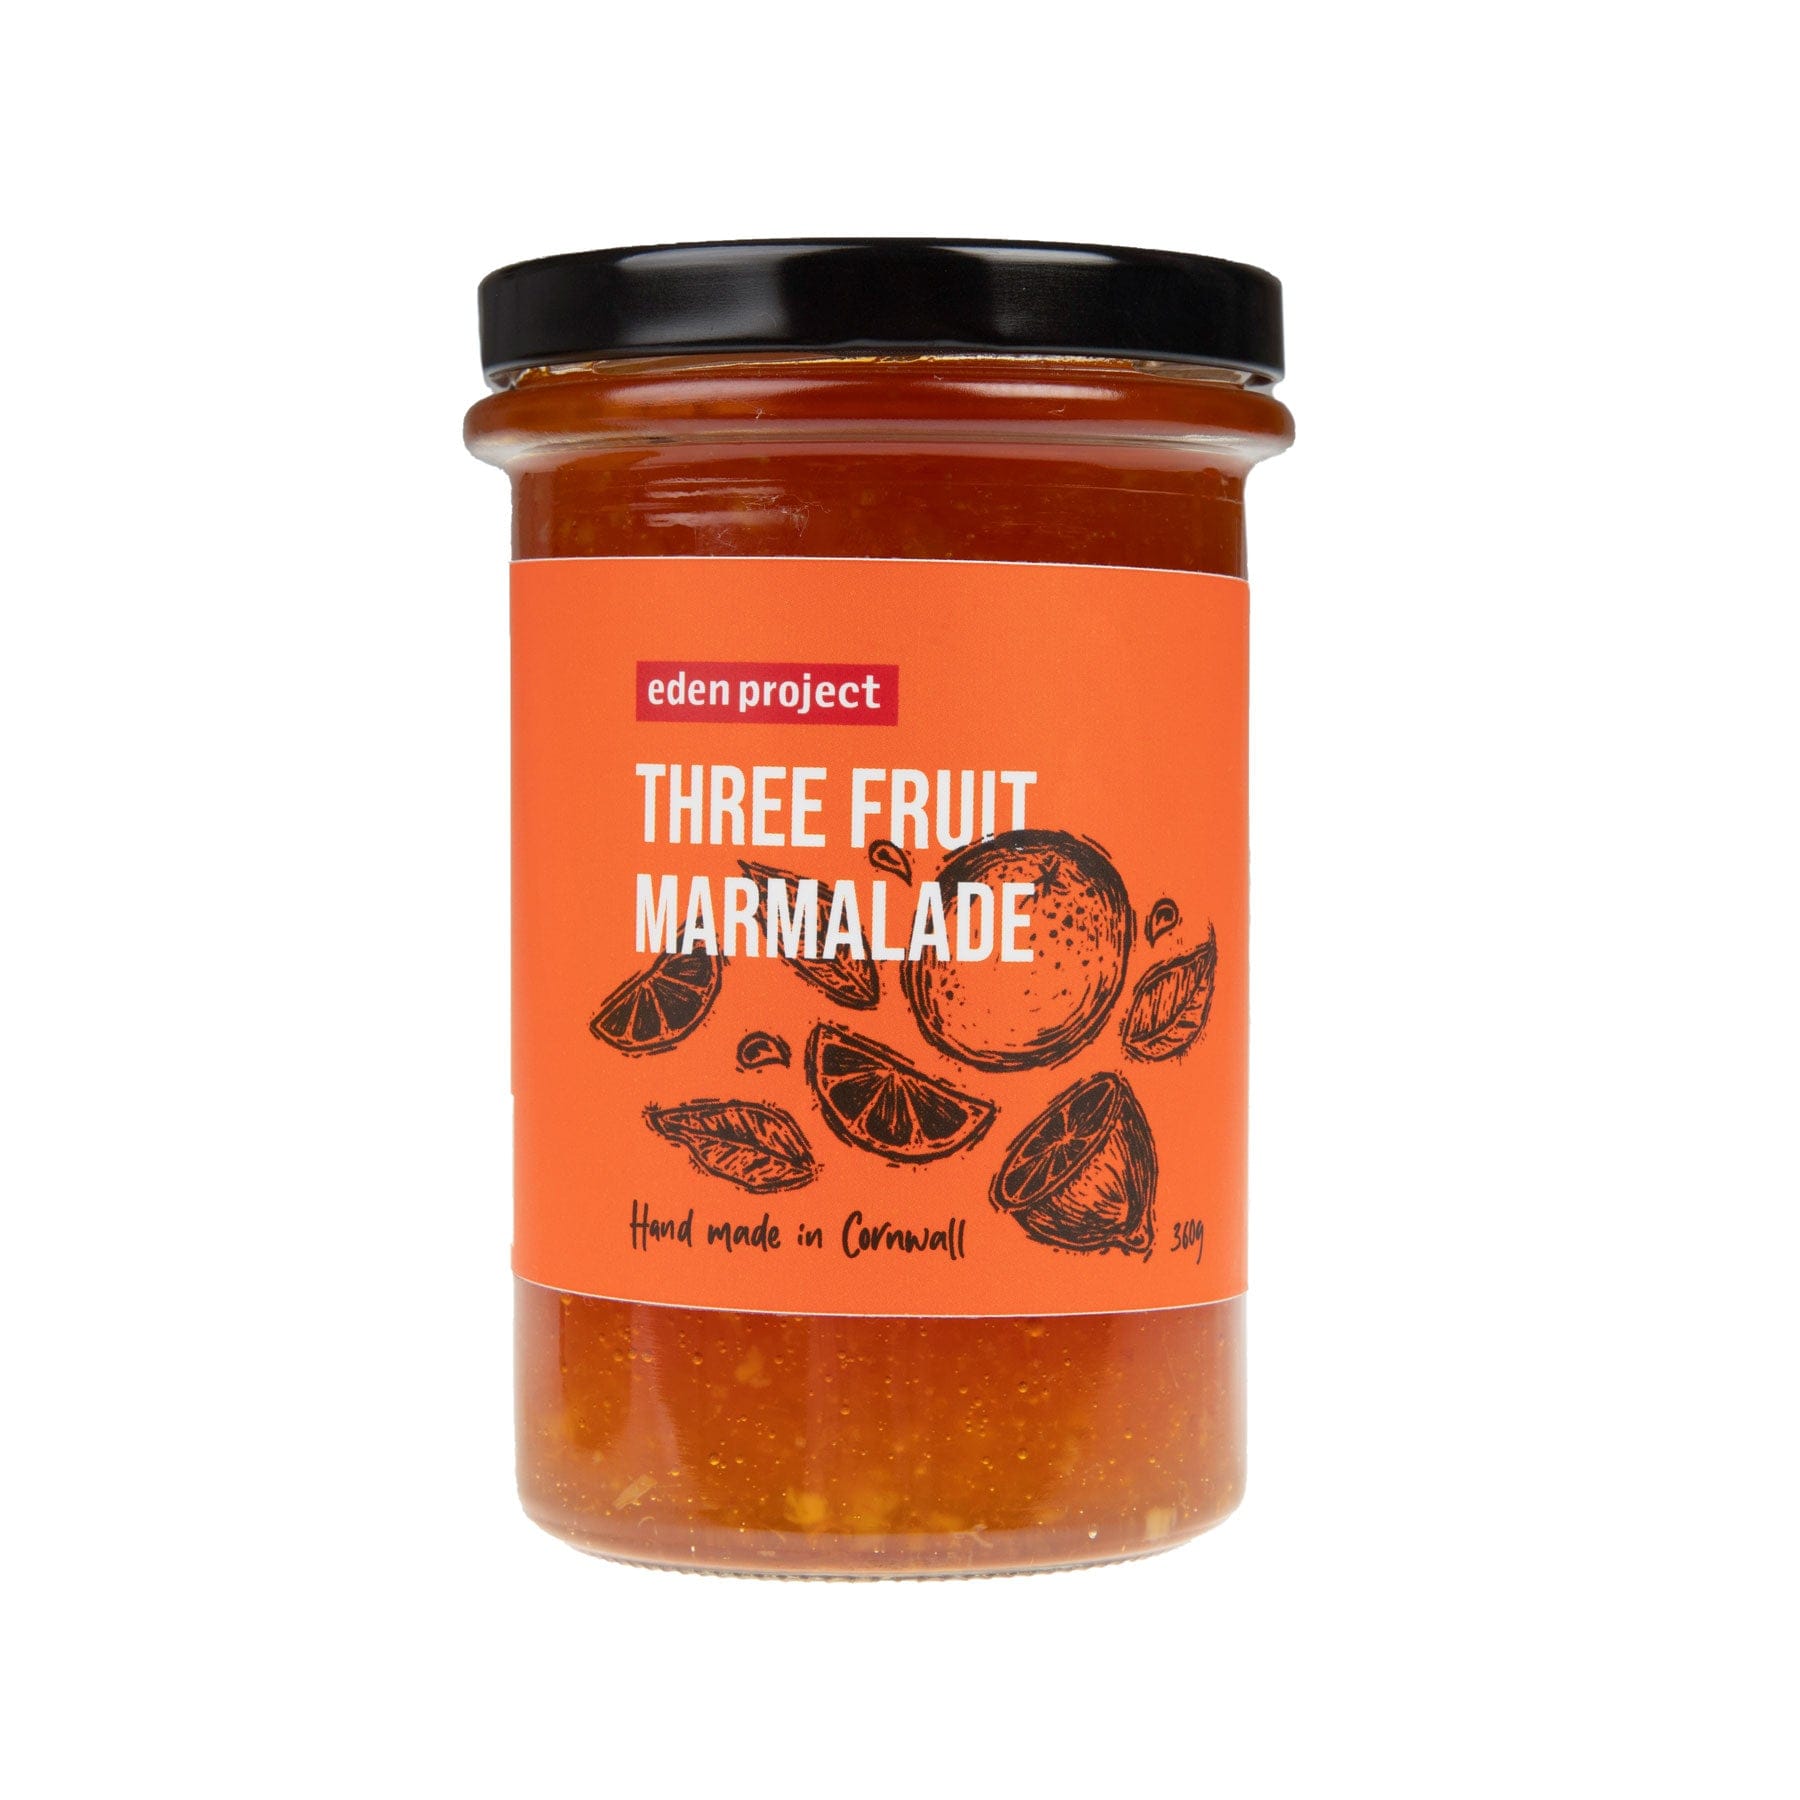 Three fruit marmalade 360g